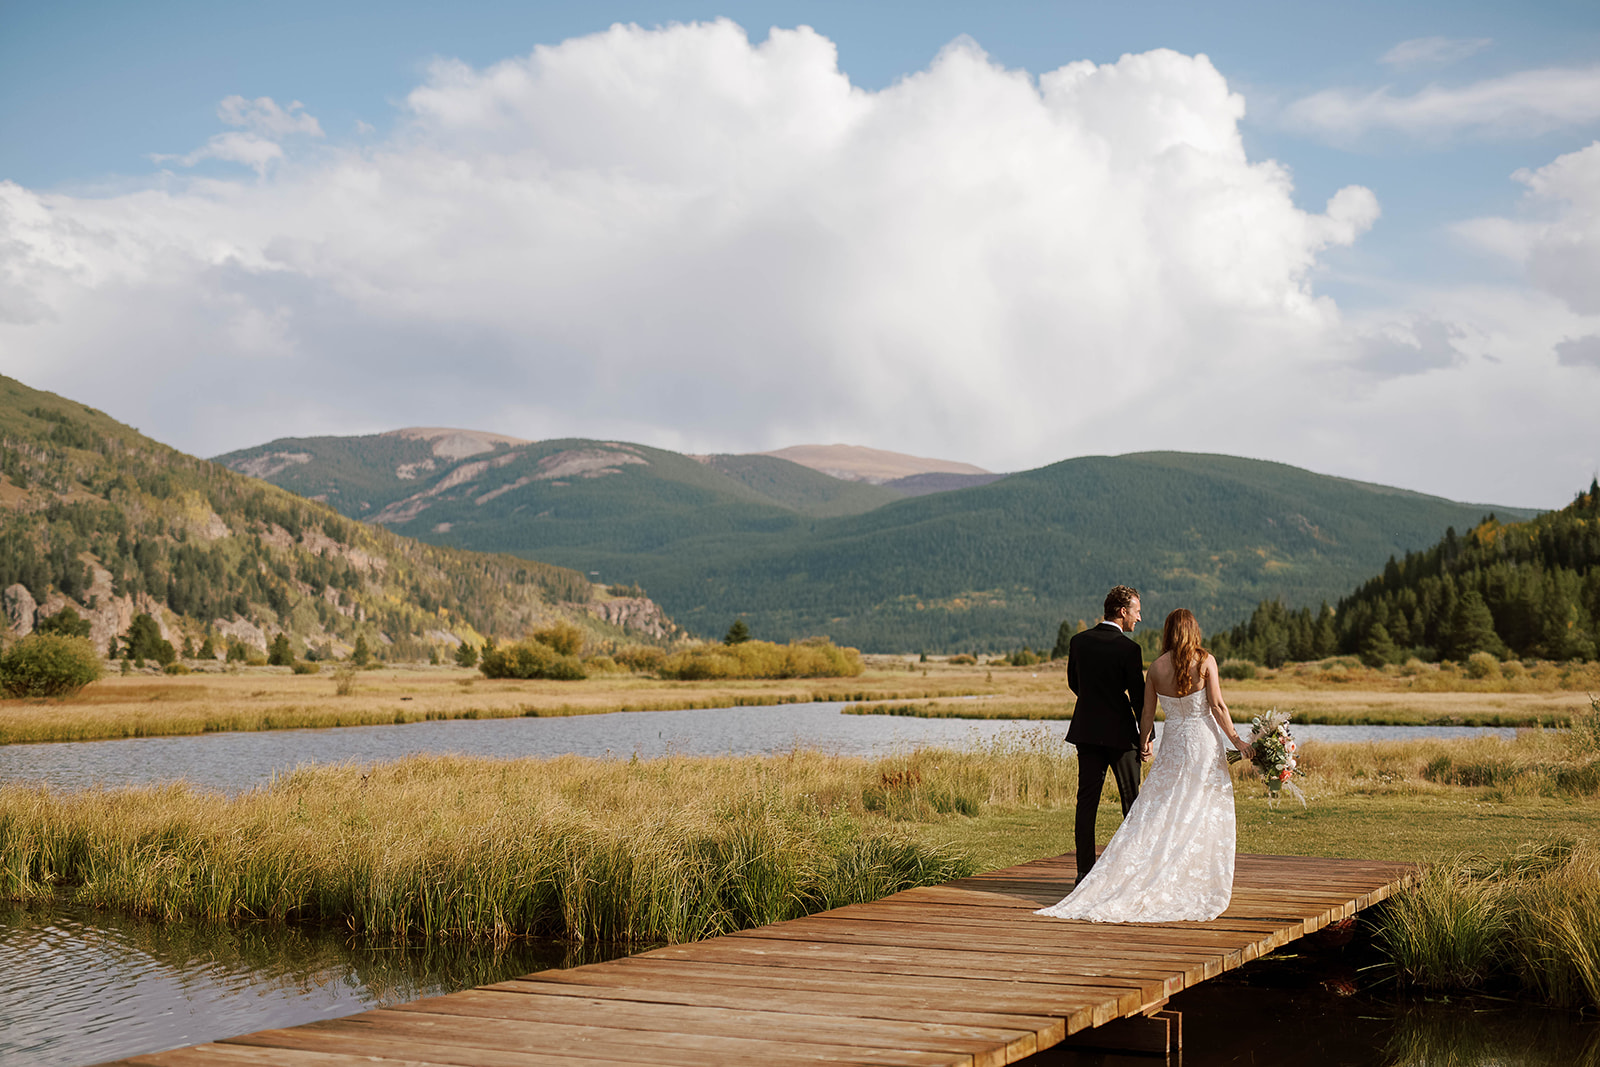 Couple at Destination wedding on dock in Colorado